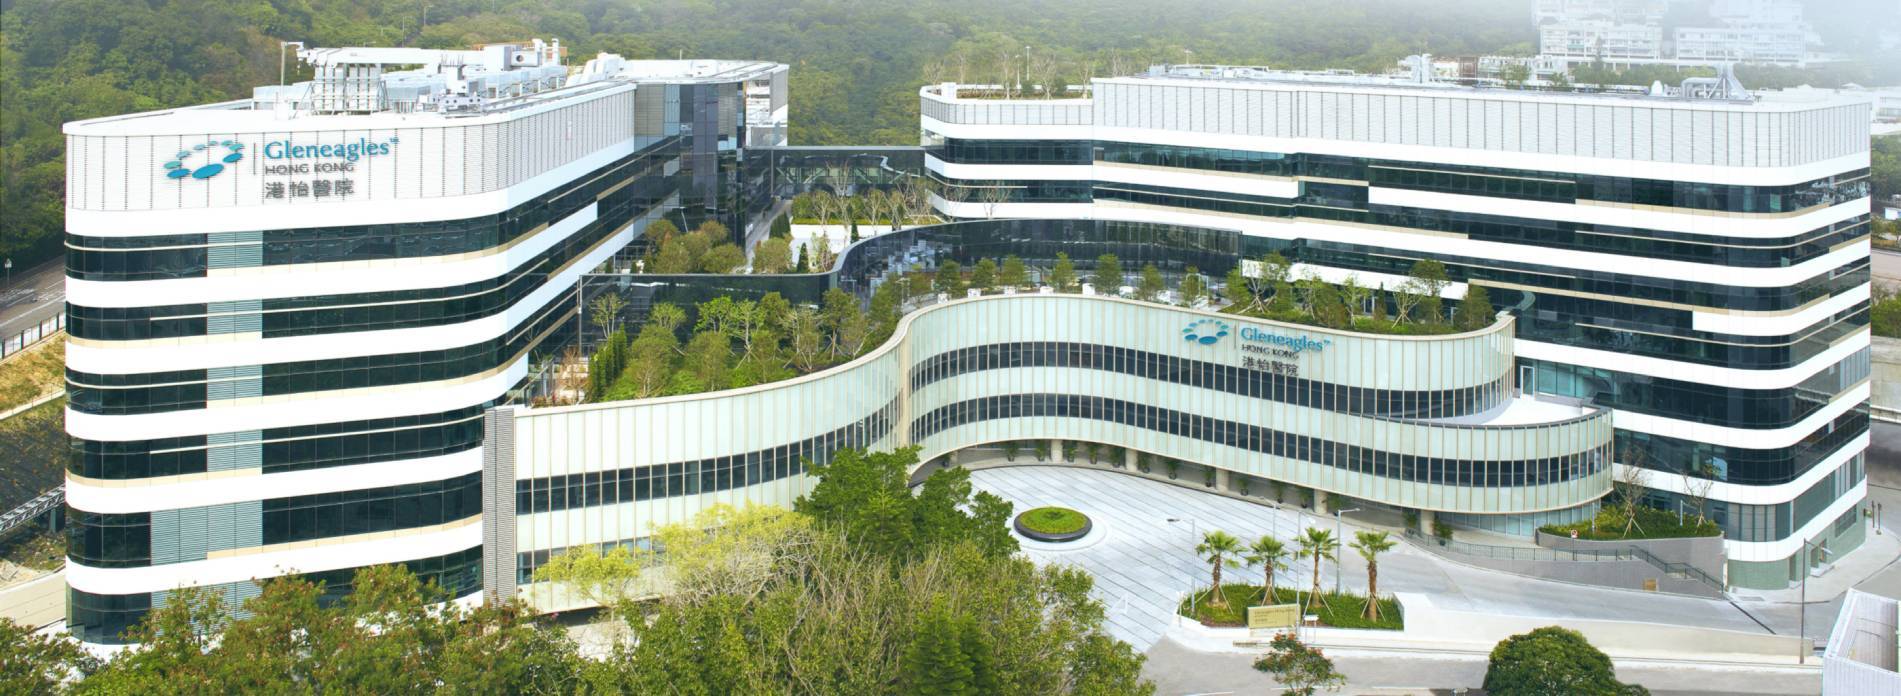 Gleneagles Hong Kong Hospital wins regional award for innovation in helping shape Hong Kong’s private healthcare